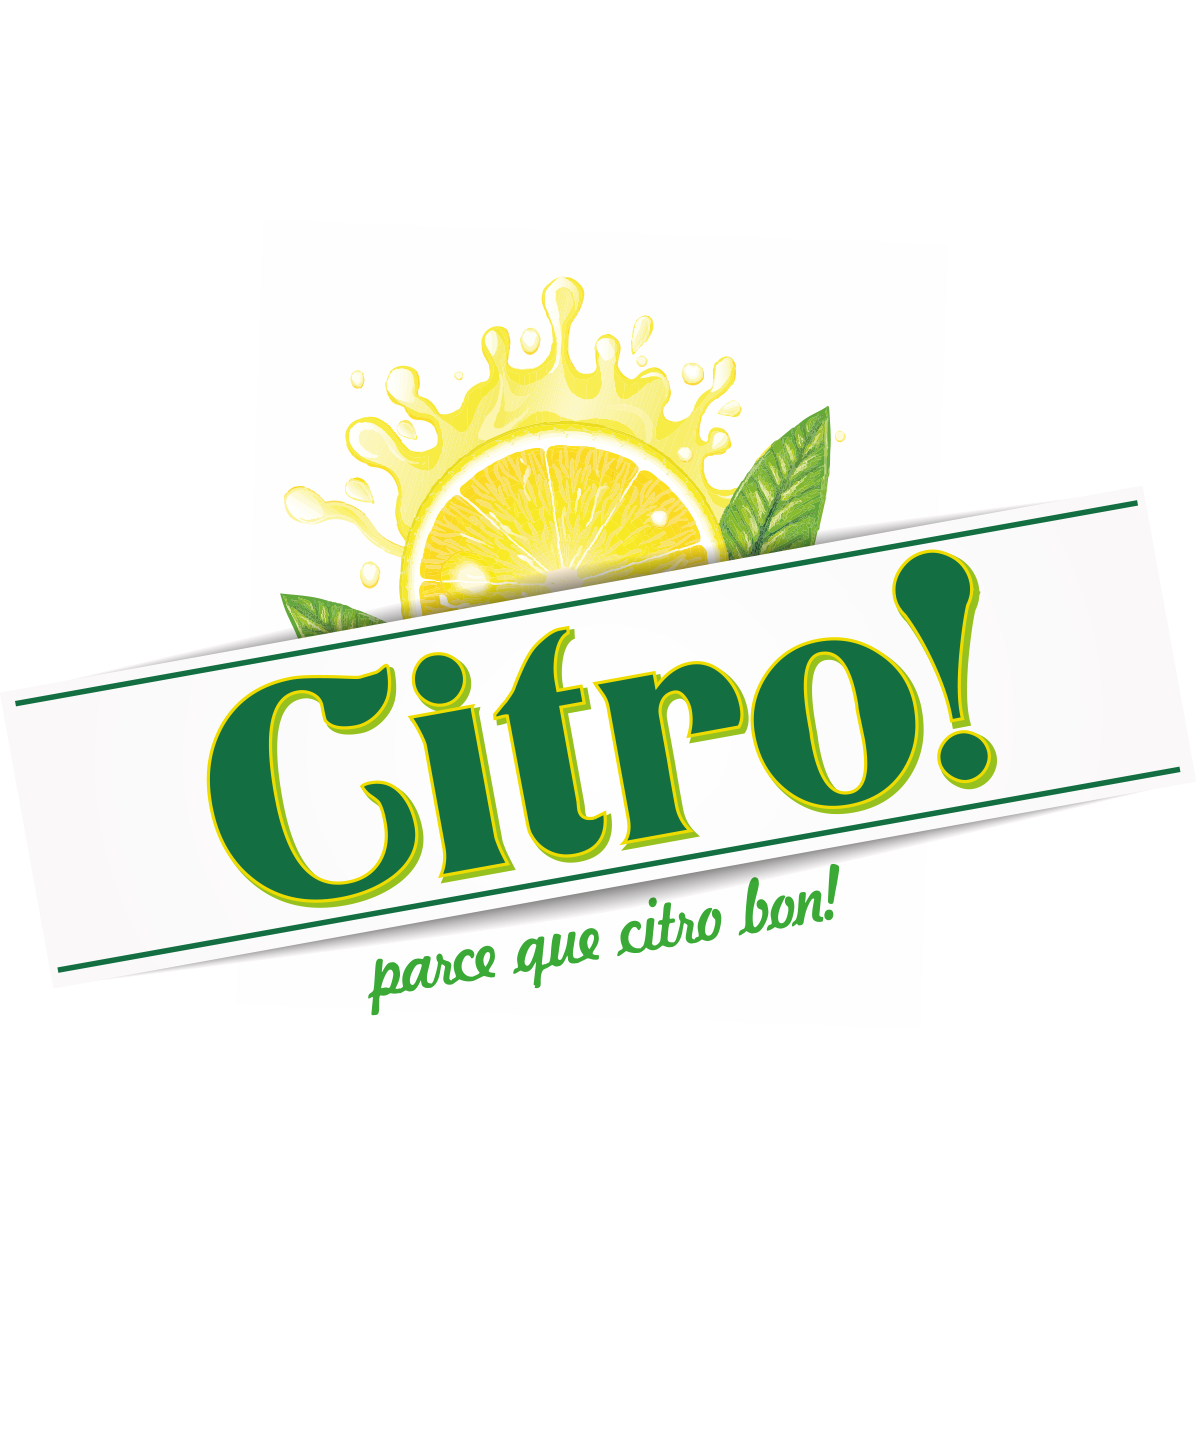 Citro